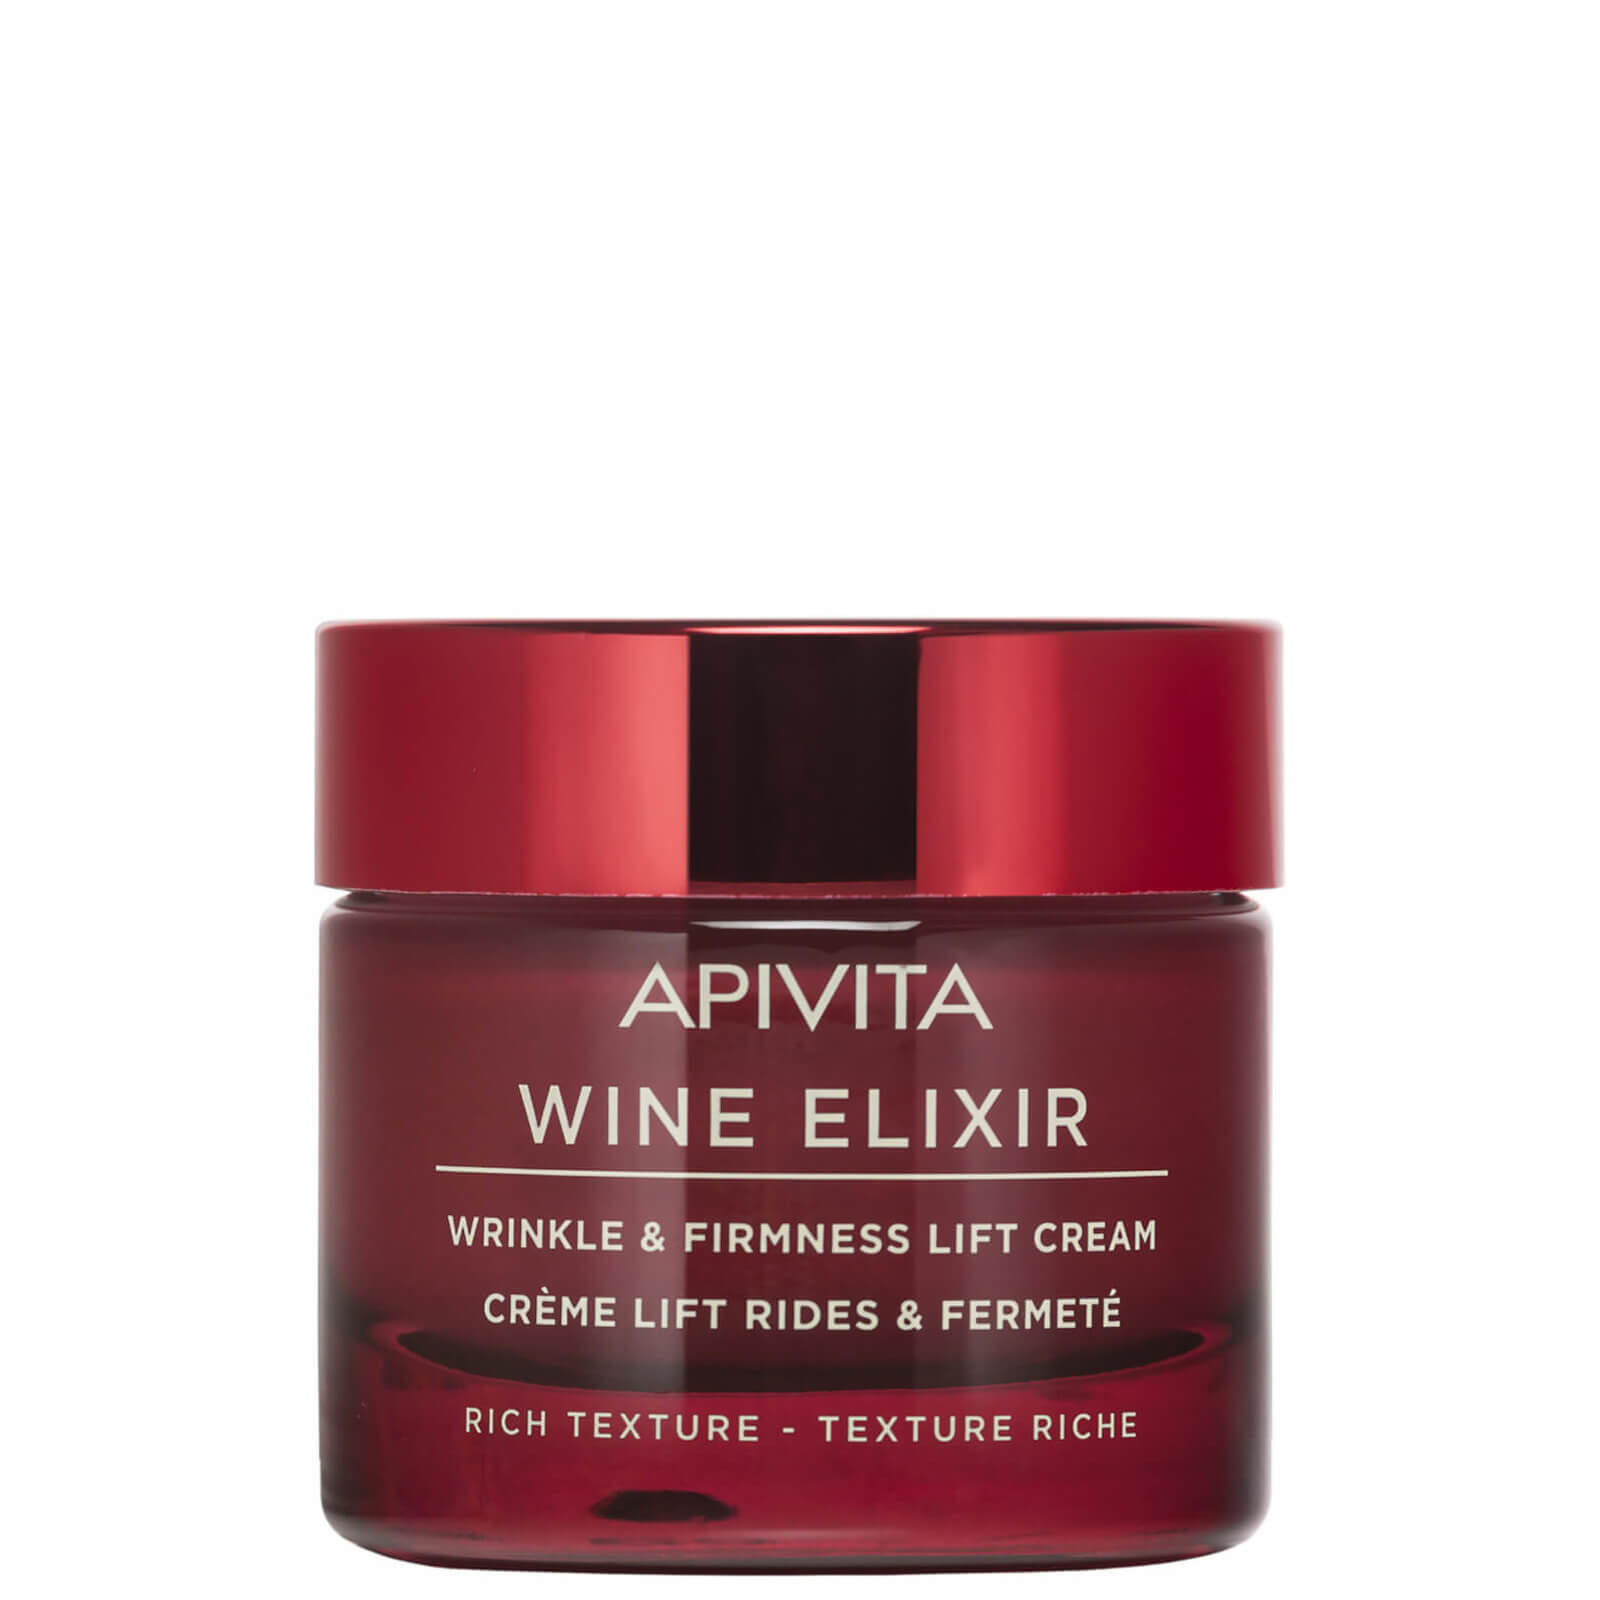 APIVITA Wine Elixir Wrinkle & Firmness Lift Cream - Rich Texture 50ml